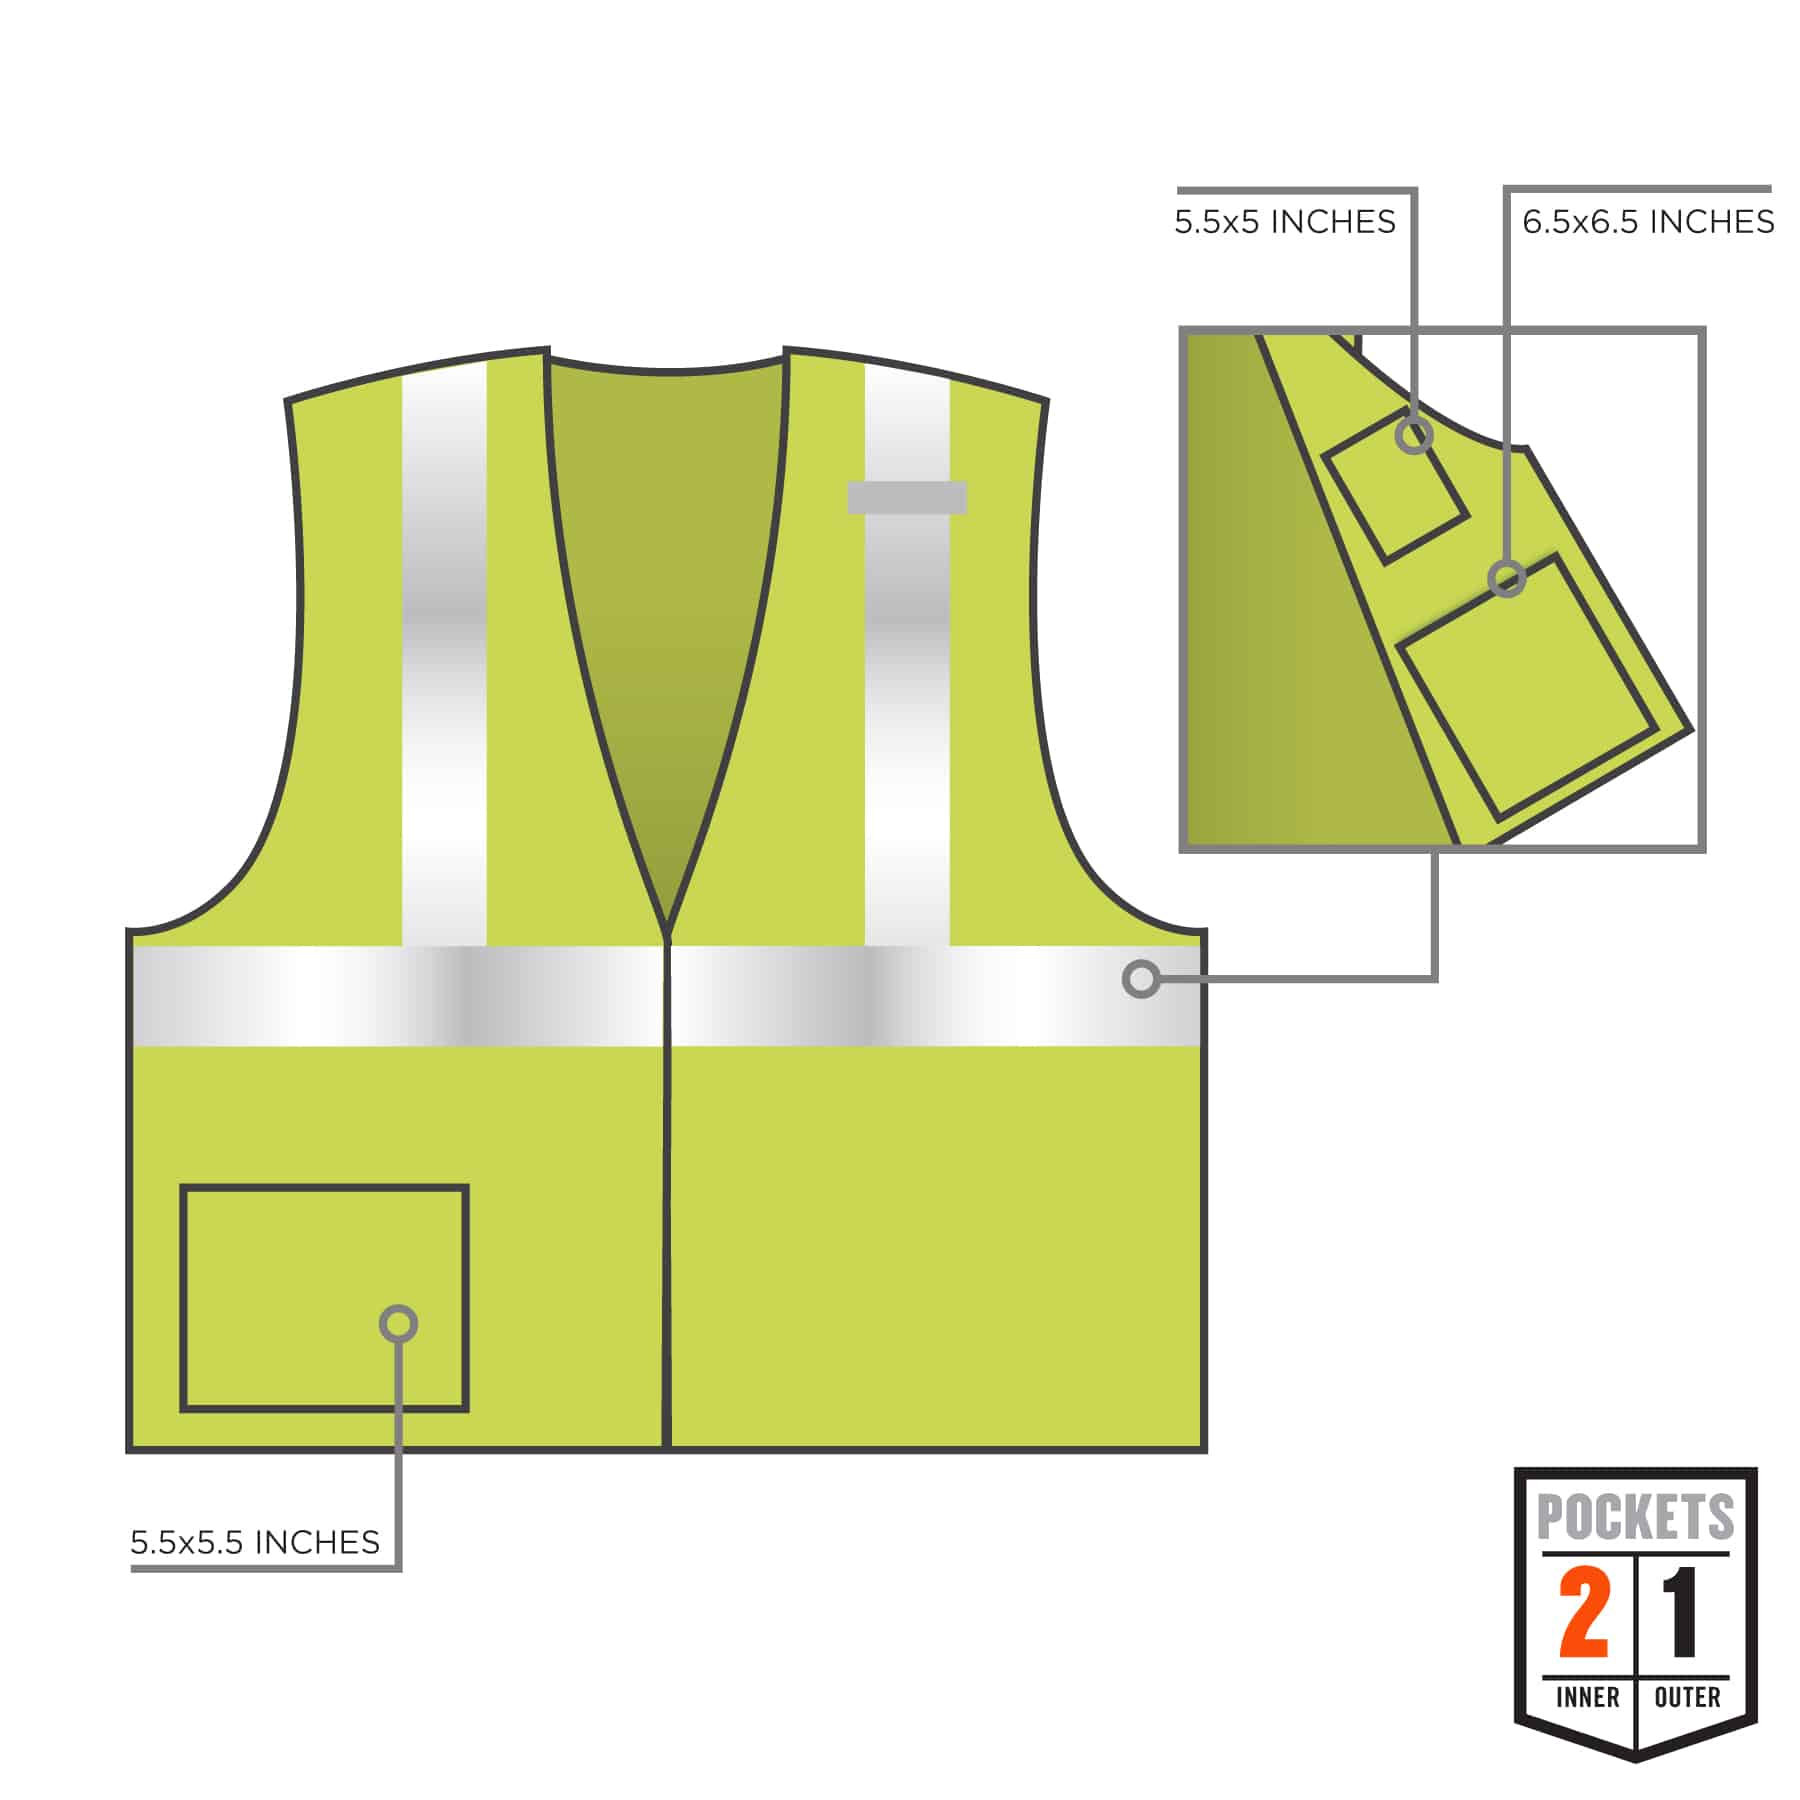 Class 2 Hi-Vis 5-Point Breakaway Safety Vest